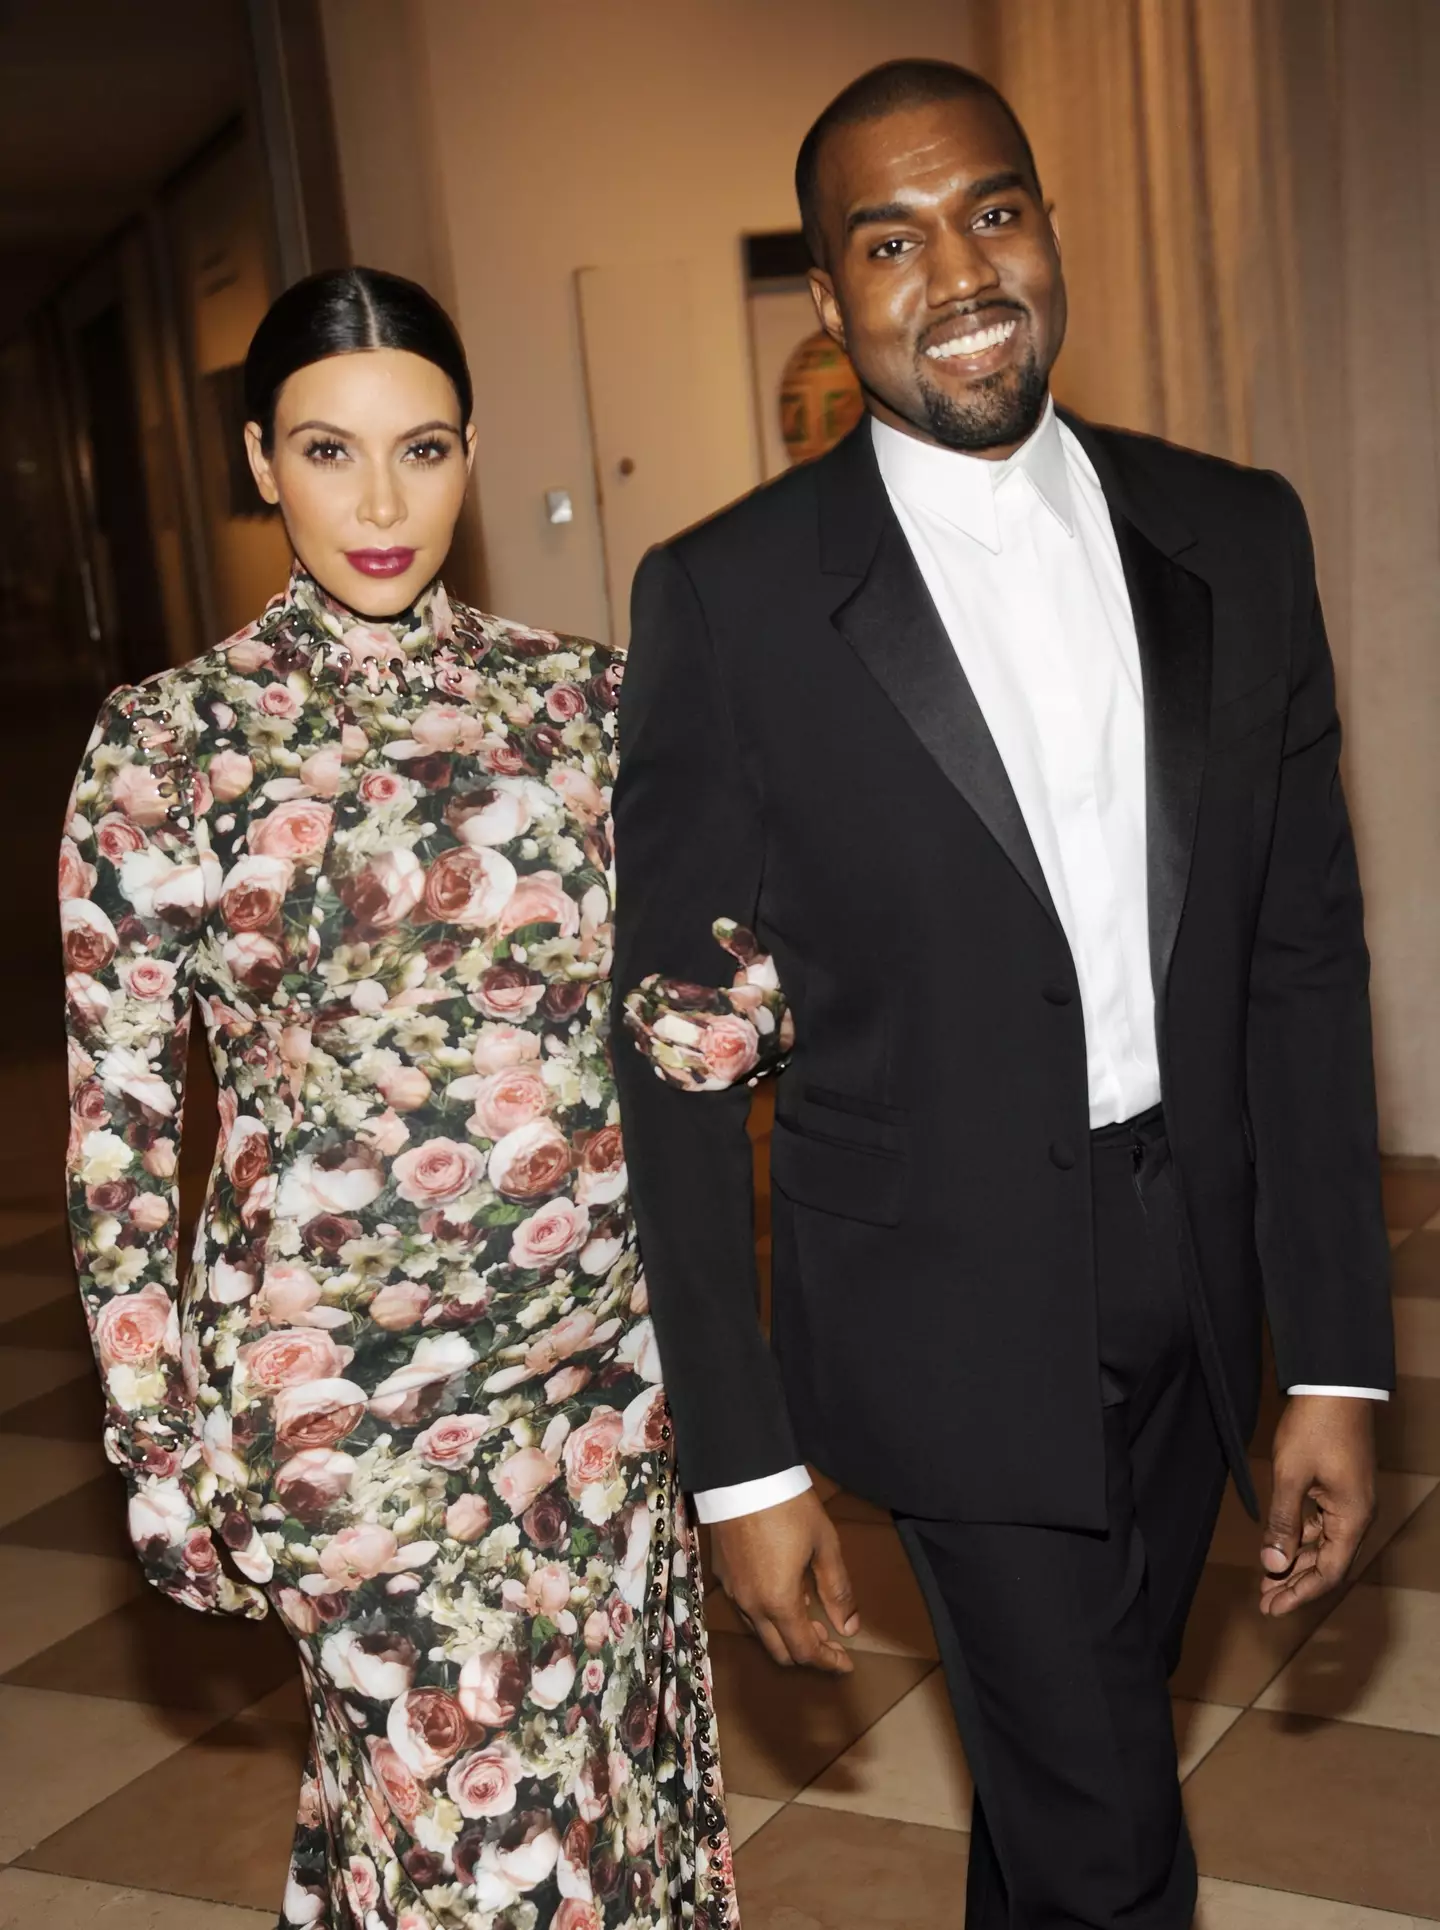 Kim Kardashian pictured with ex-husband Kanye West at the 2013 Met Gala.